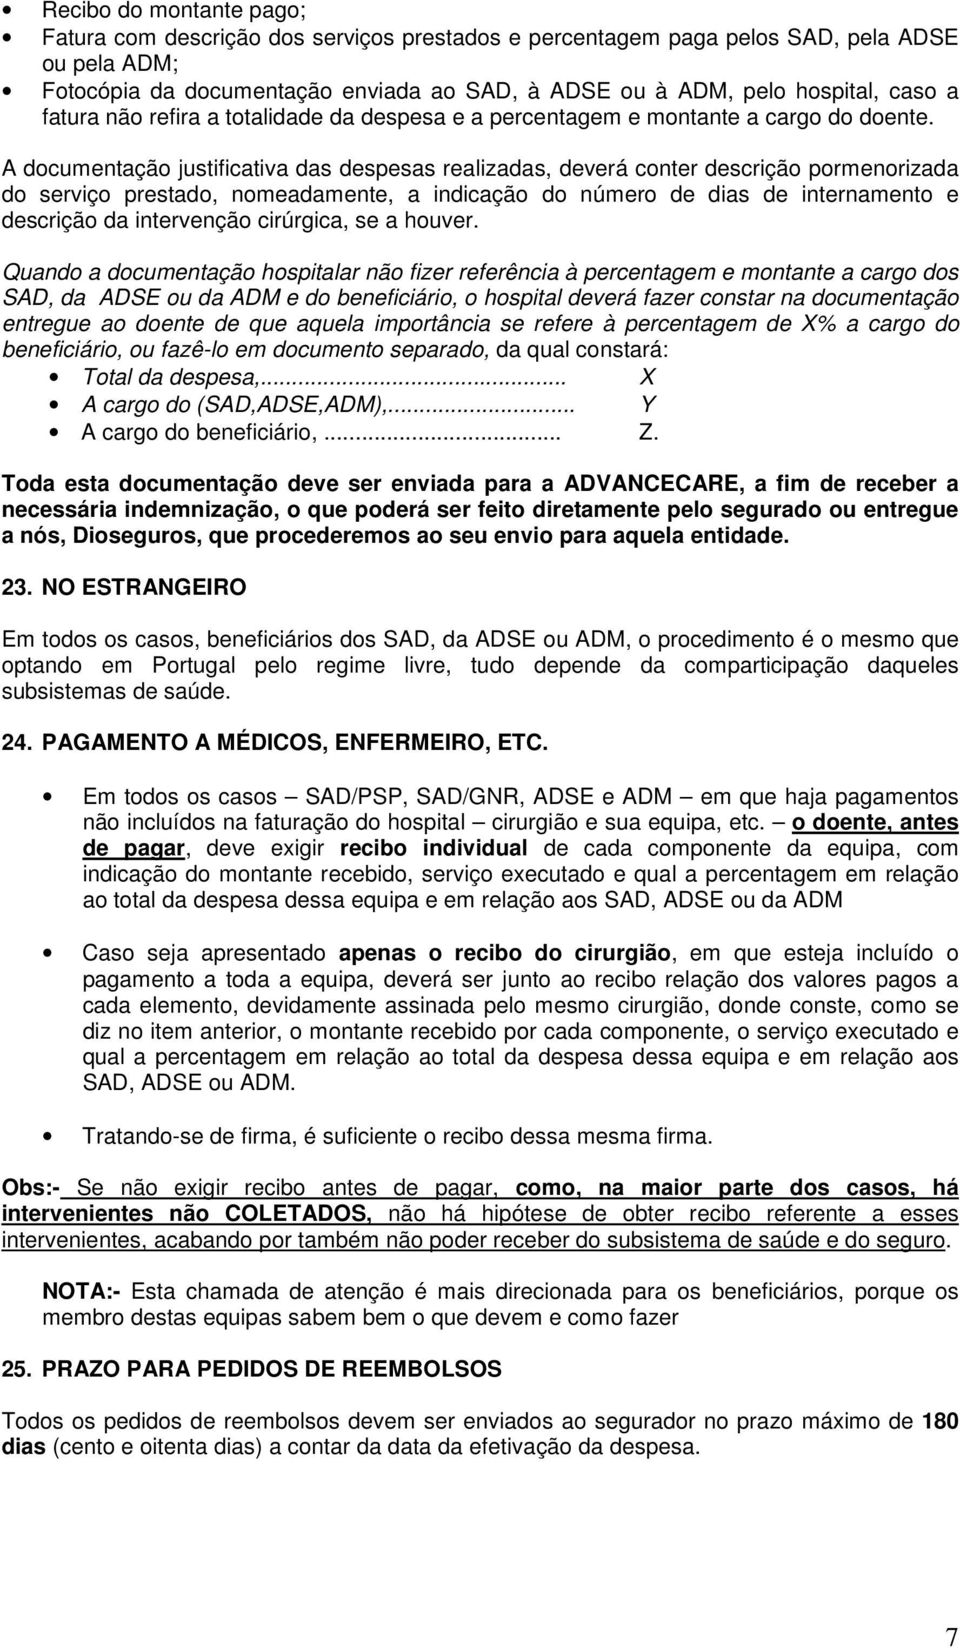 COMPLEMENTO DE SAÚDE PSP GNR ADSE - ADM VITALPLAN/PROTOCOLO DIOSEGUROS -  PDF Download grátis